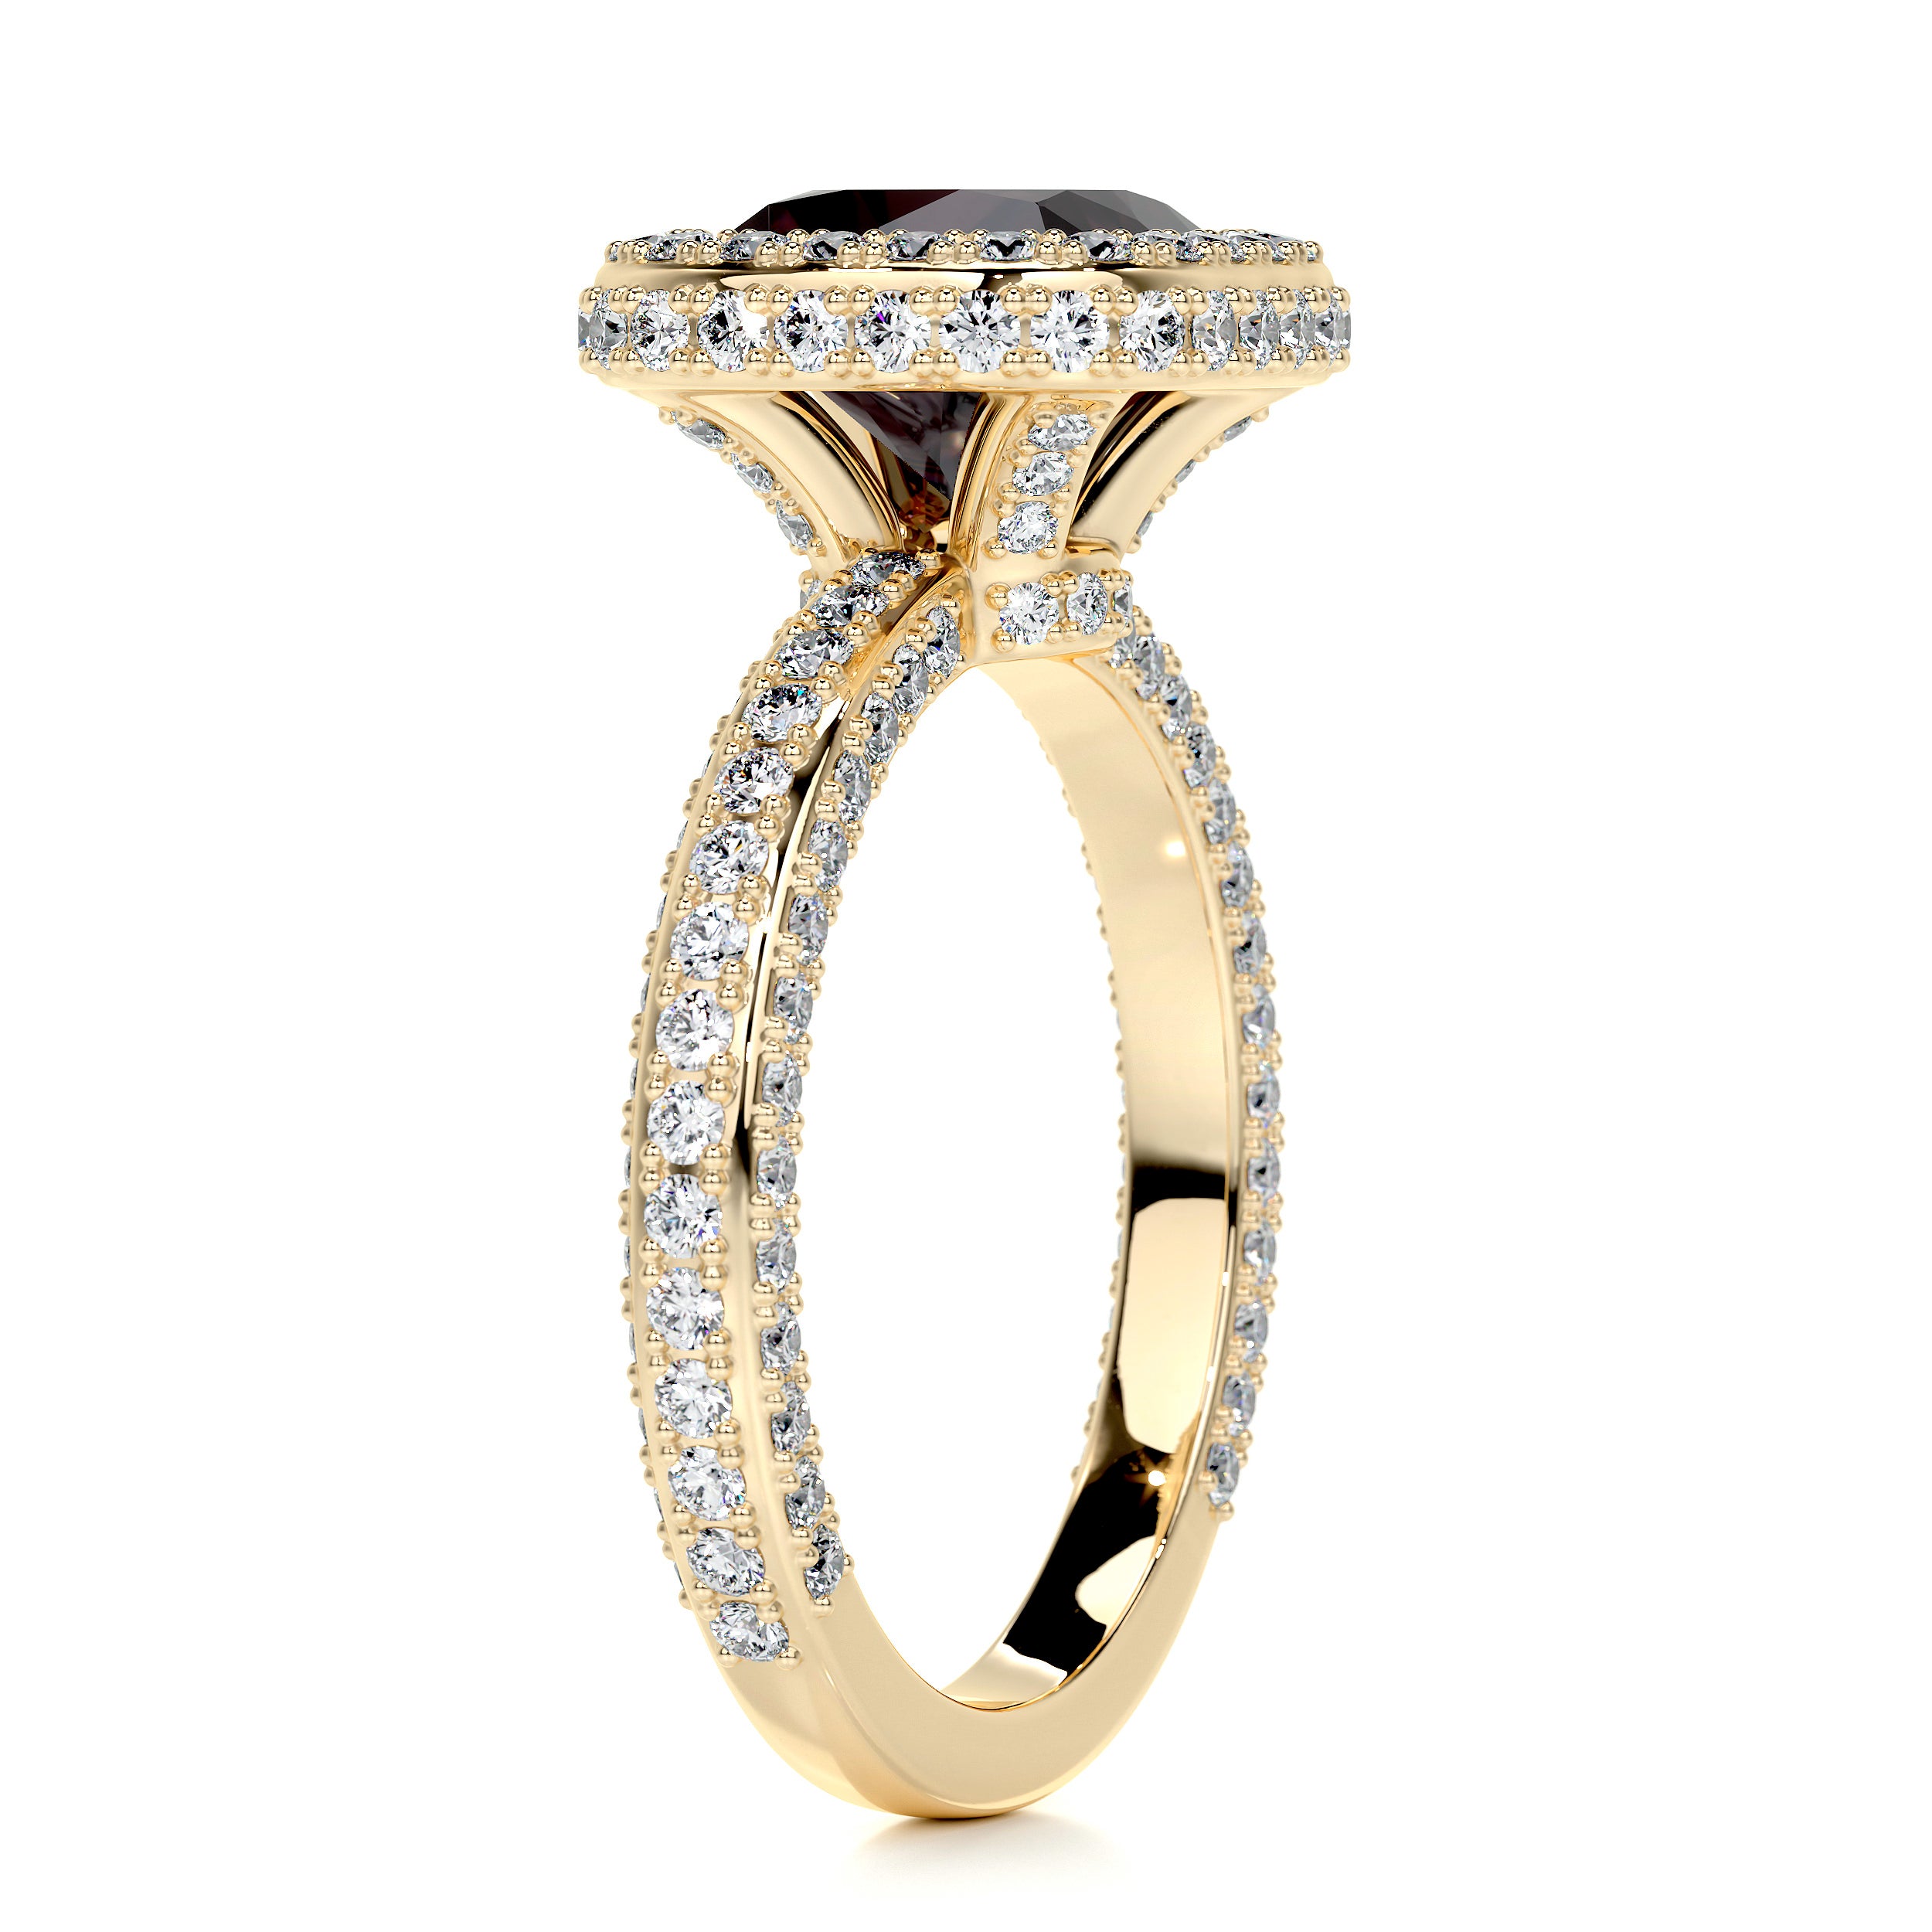 Kim Gemstone & Diamonds Ring   (4 Carat) -18K Yellow Gold